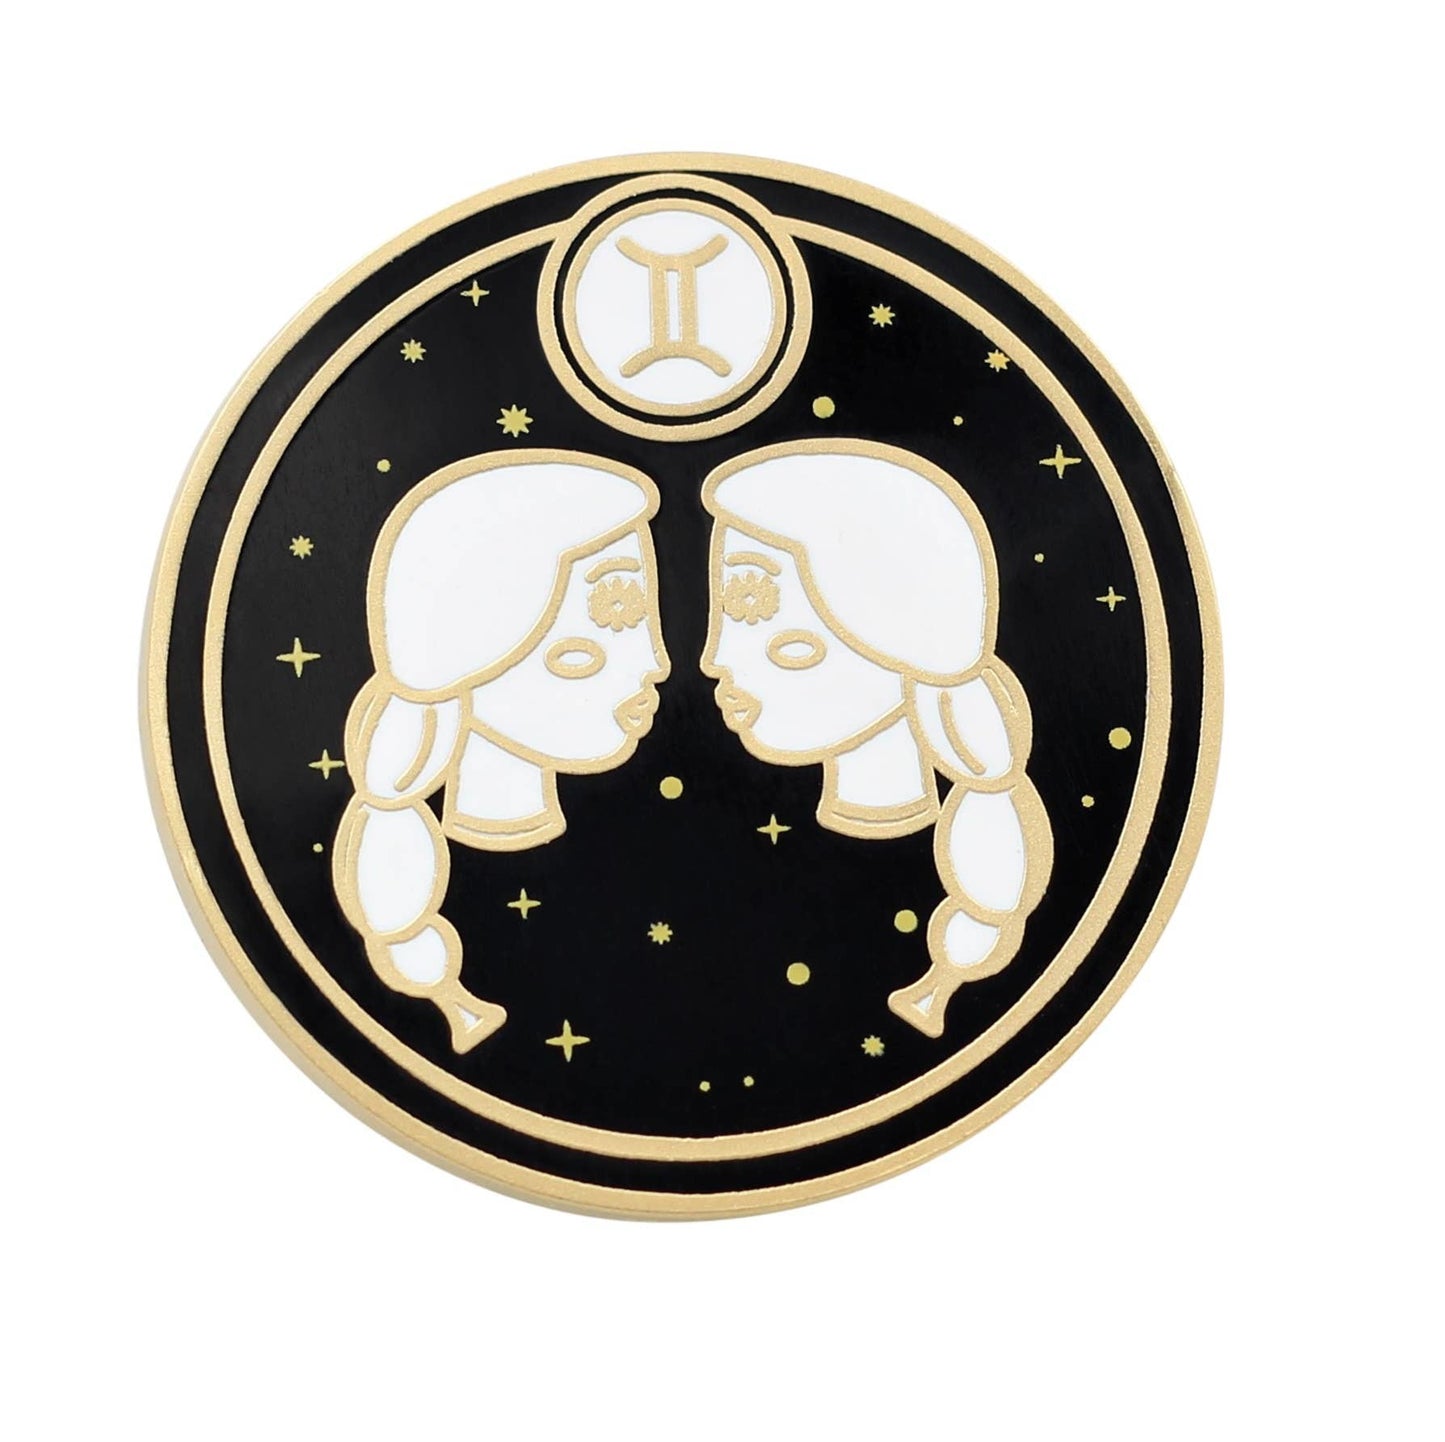 Astrological Sign - Gemini - Star Sign Astrology Enamel Pin